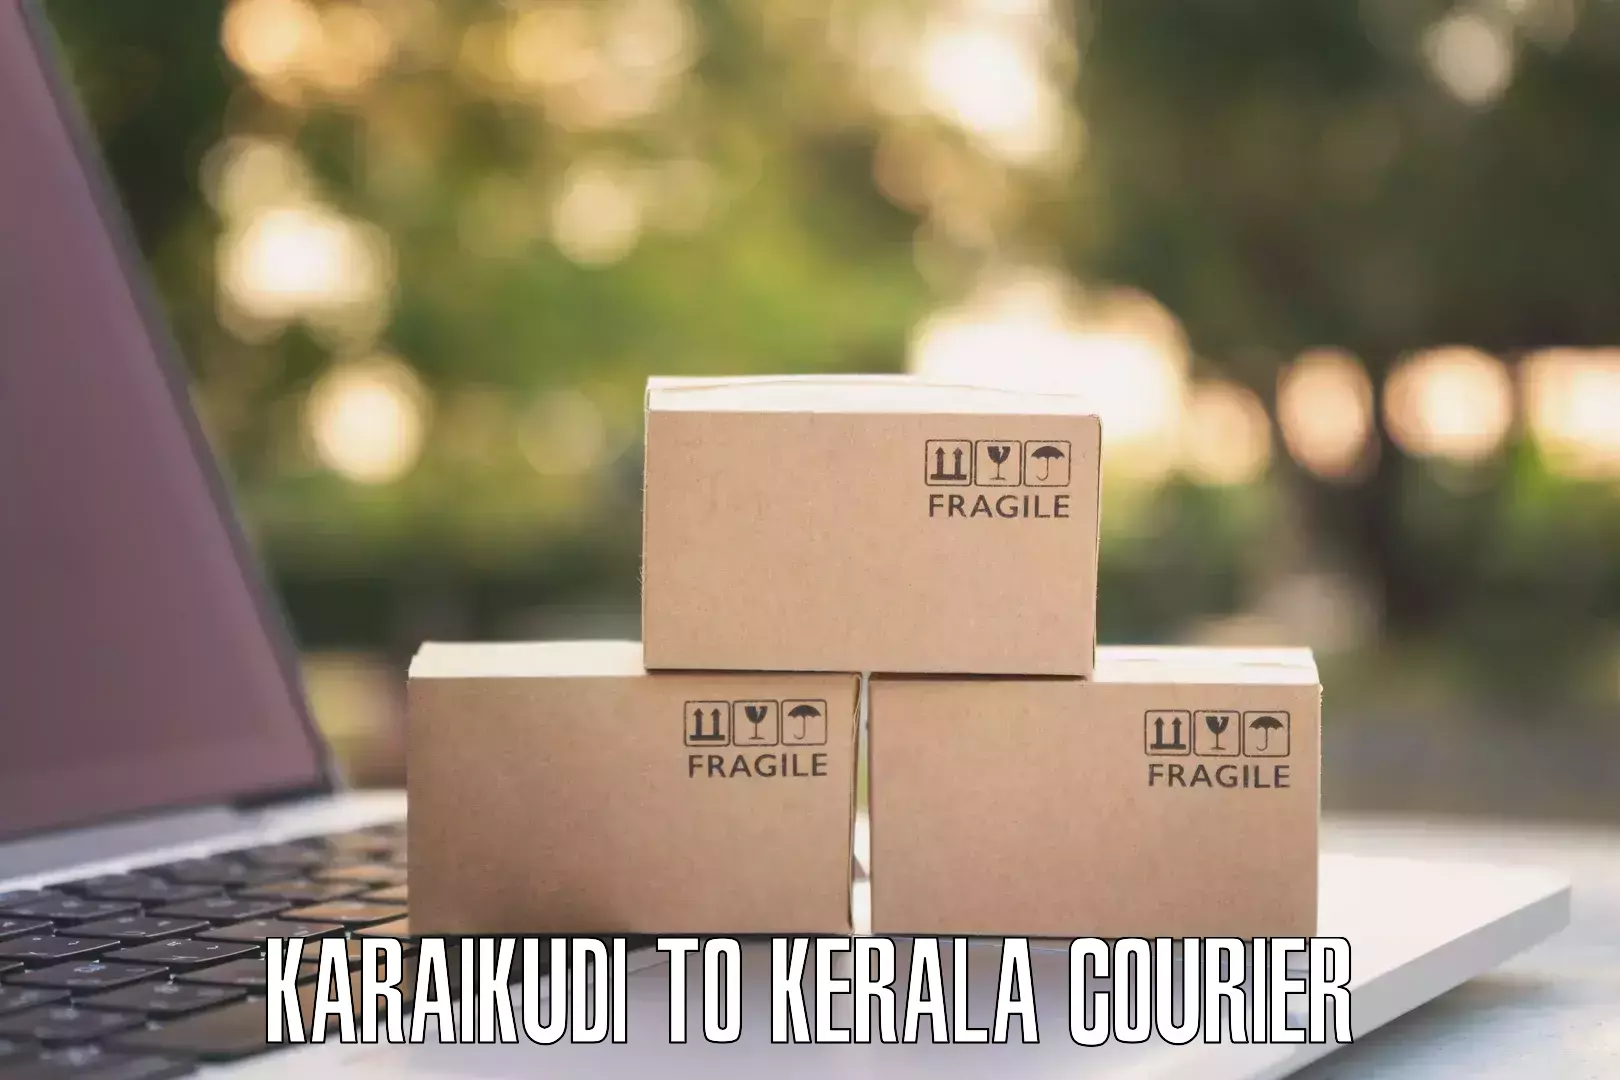 Supply chain efficiency Karaikudi to Rajamudy